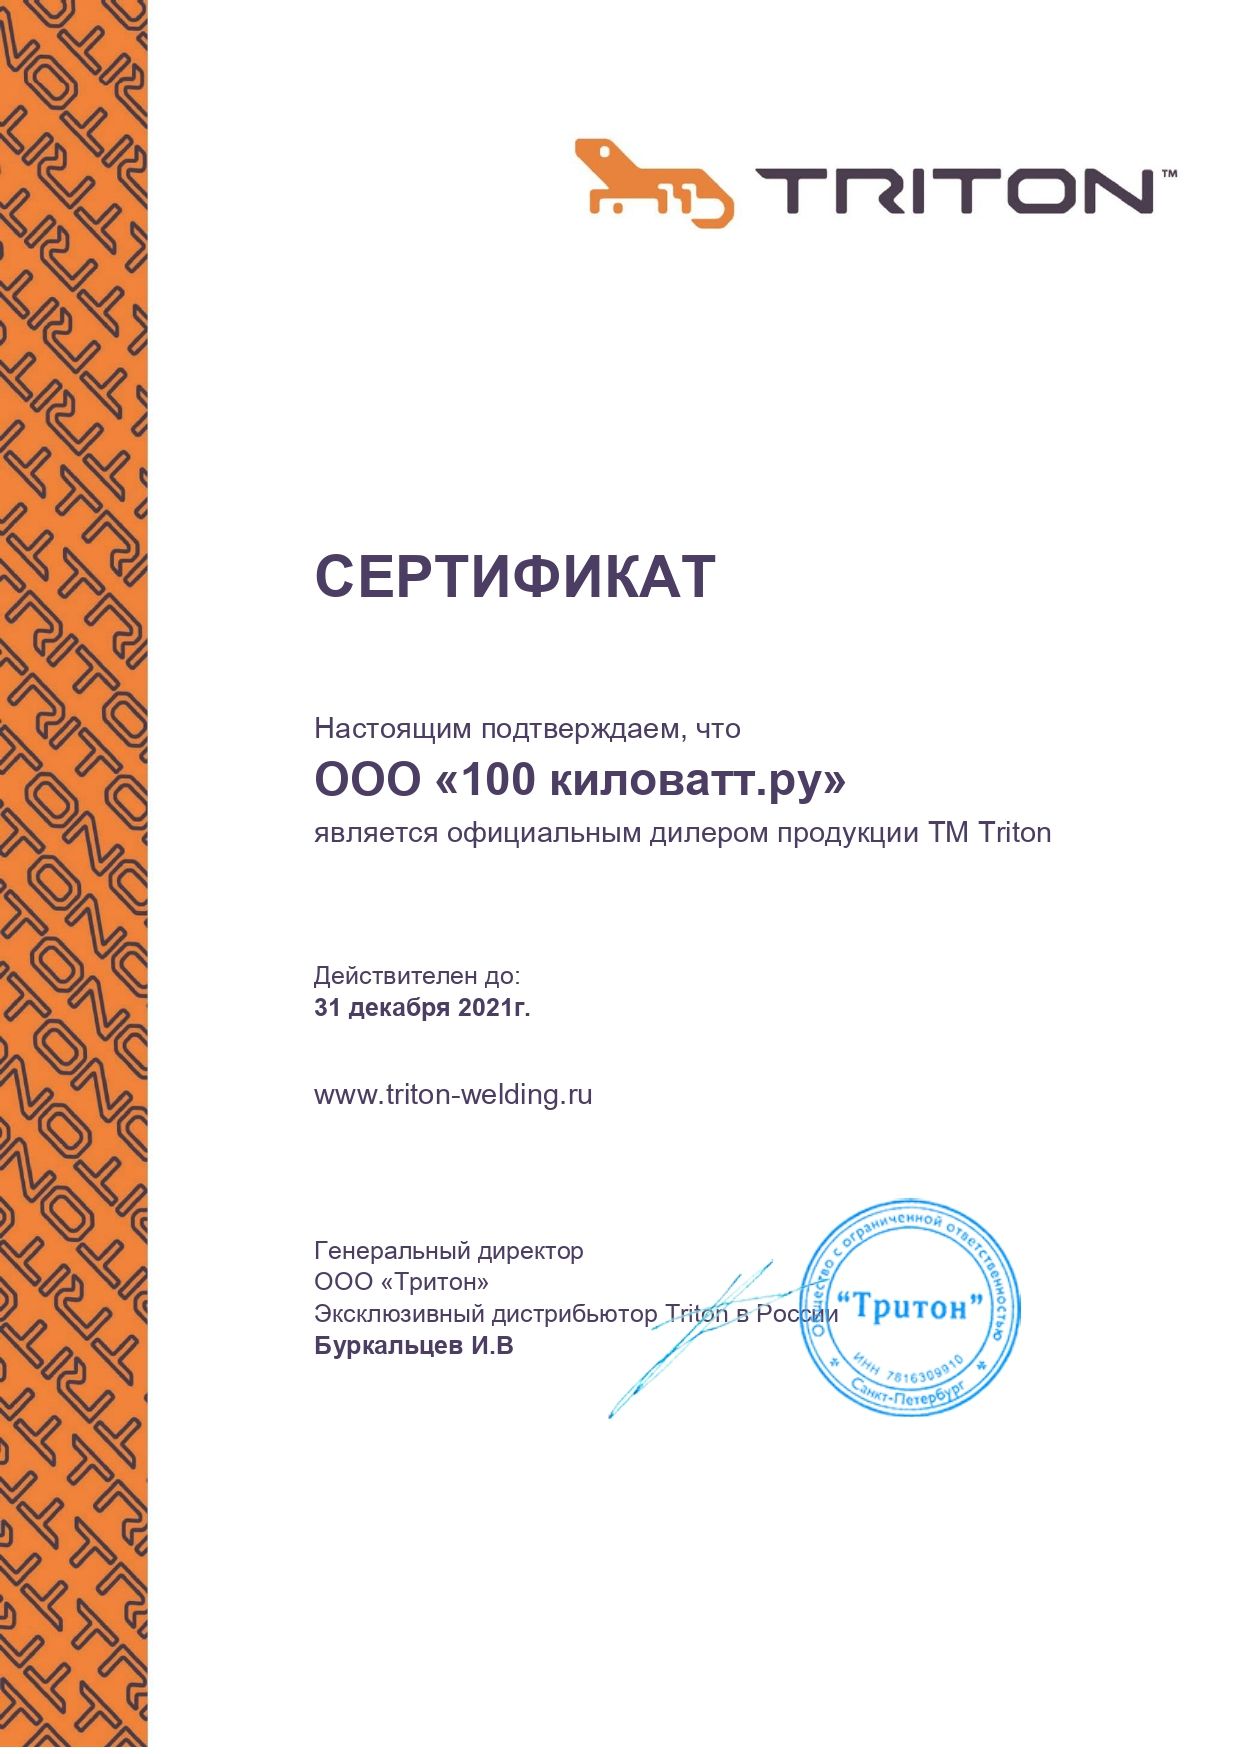 TRITON - Сертификат дилера